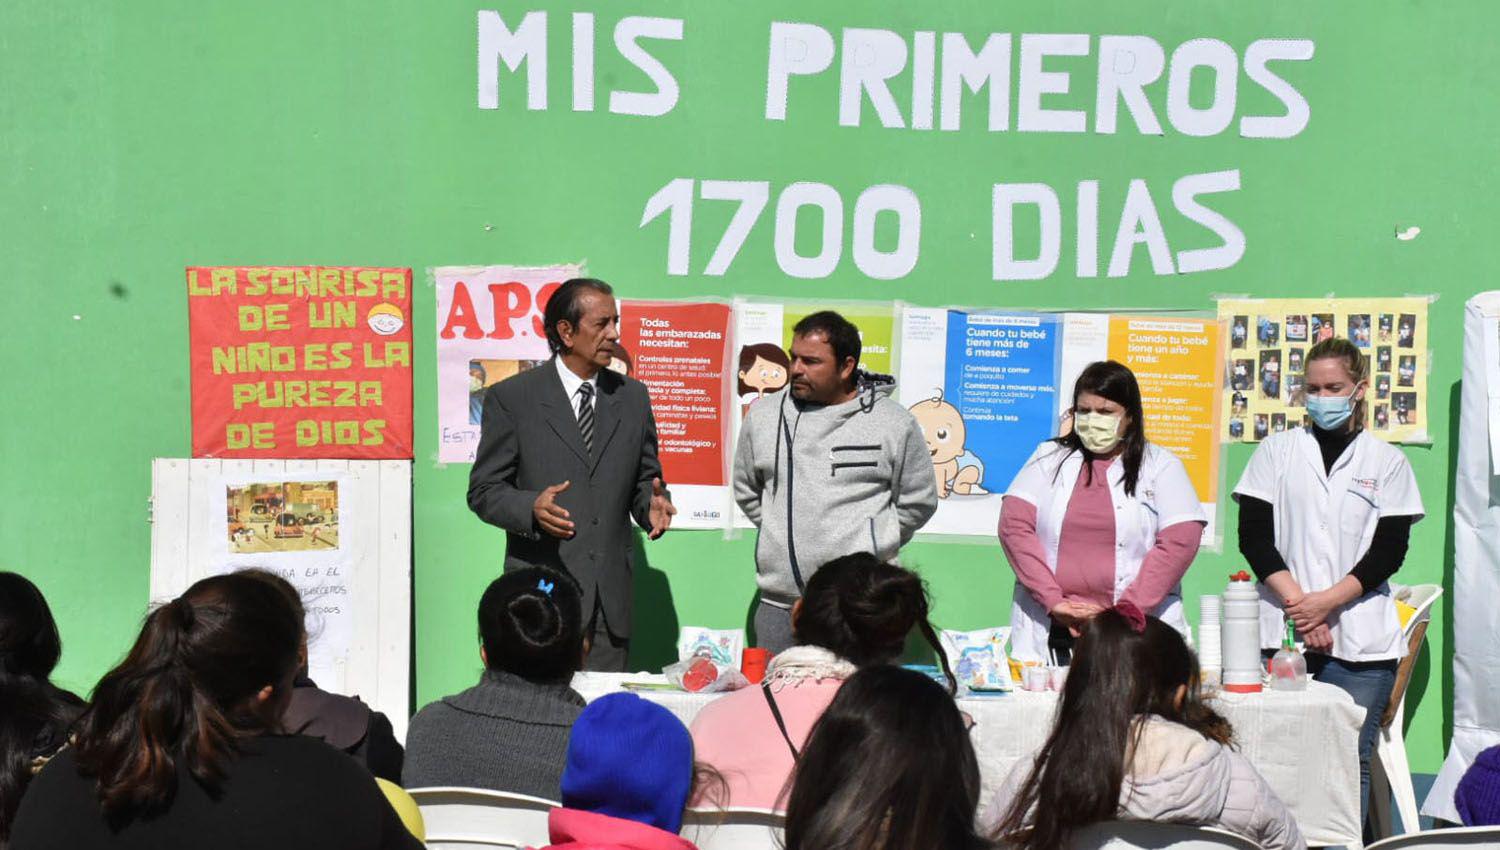 El programa ldquoMis primeros 1700 diacuteasrdquo llegoacute a la localidad de La Nena